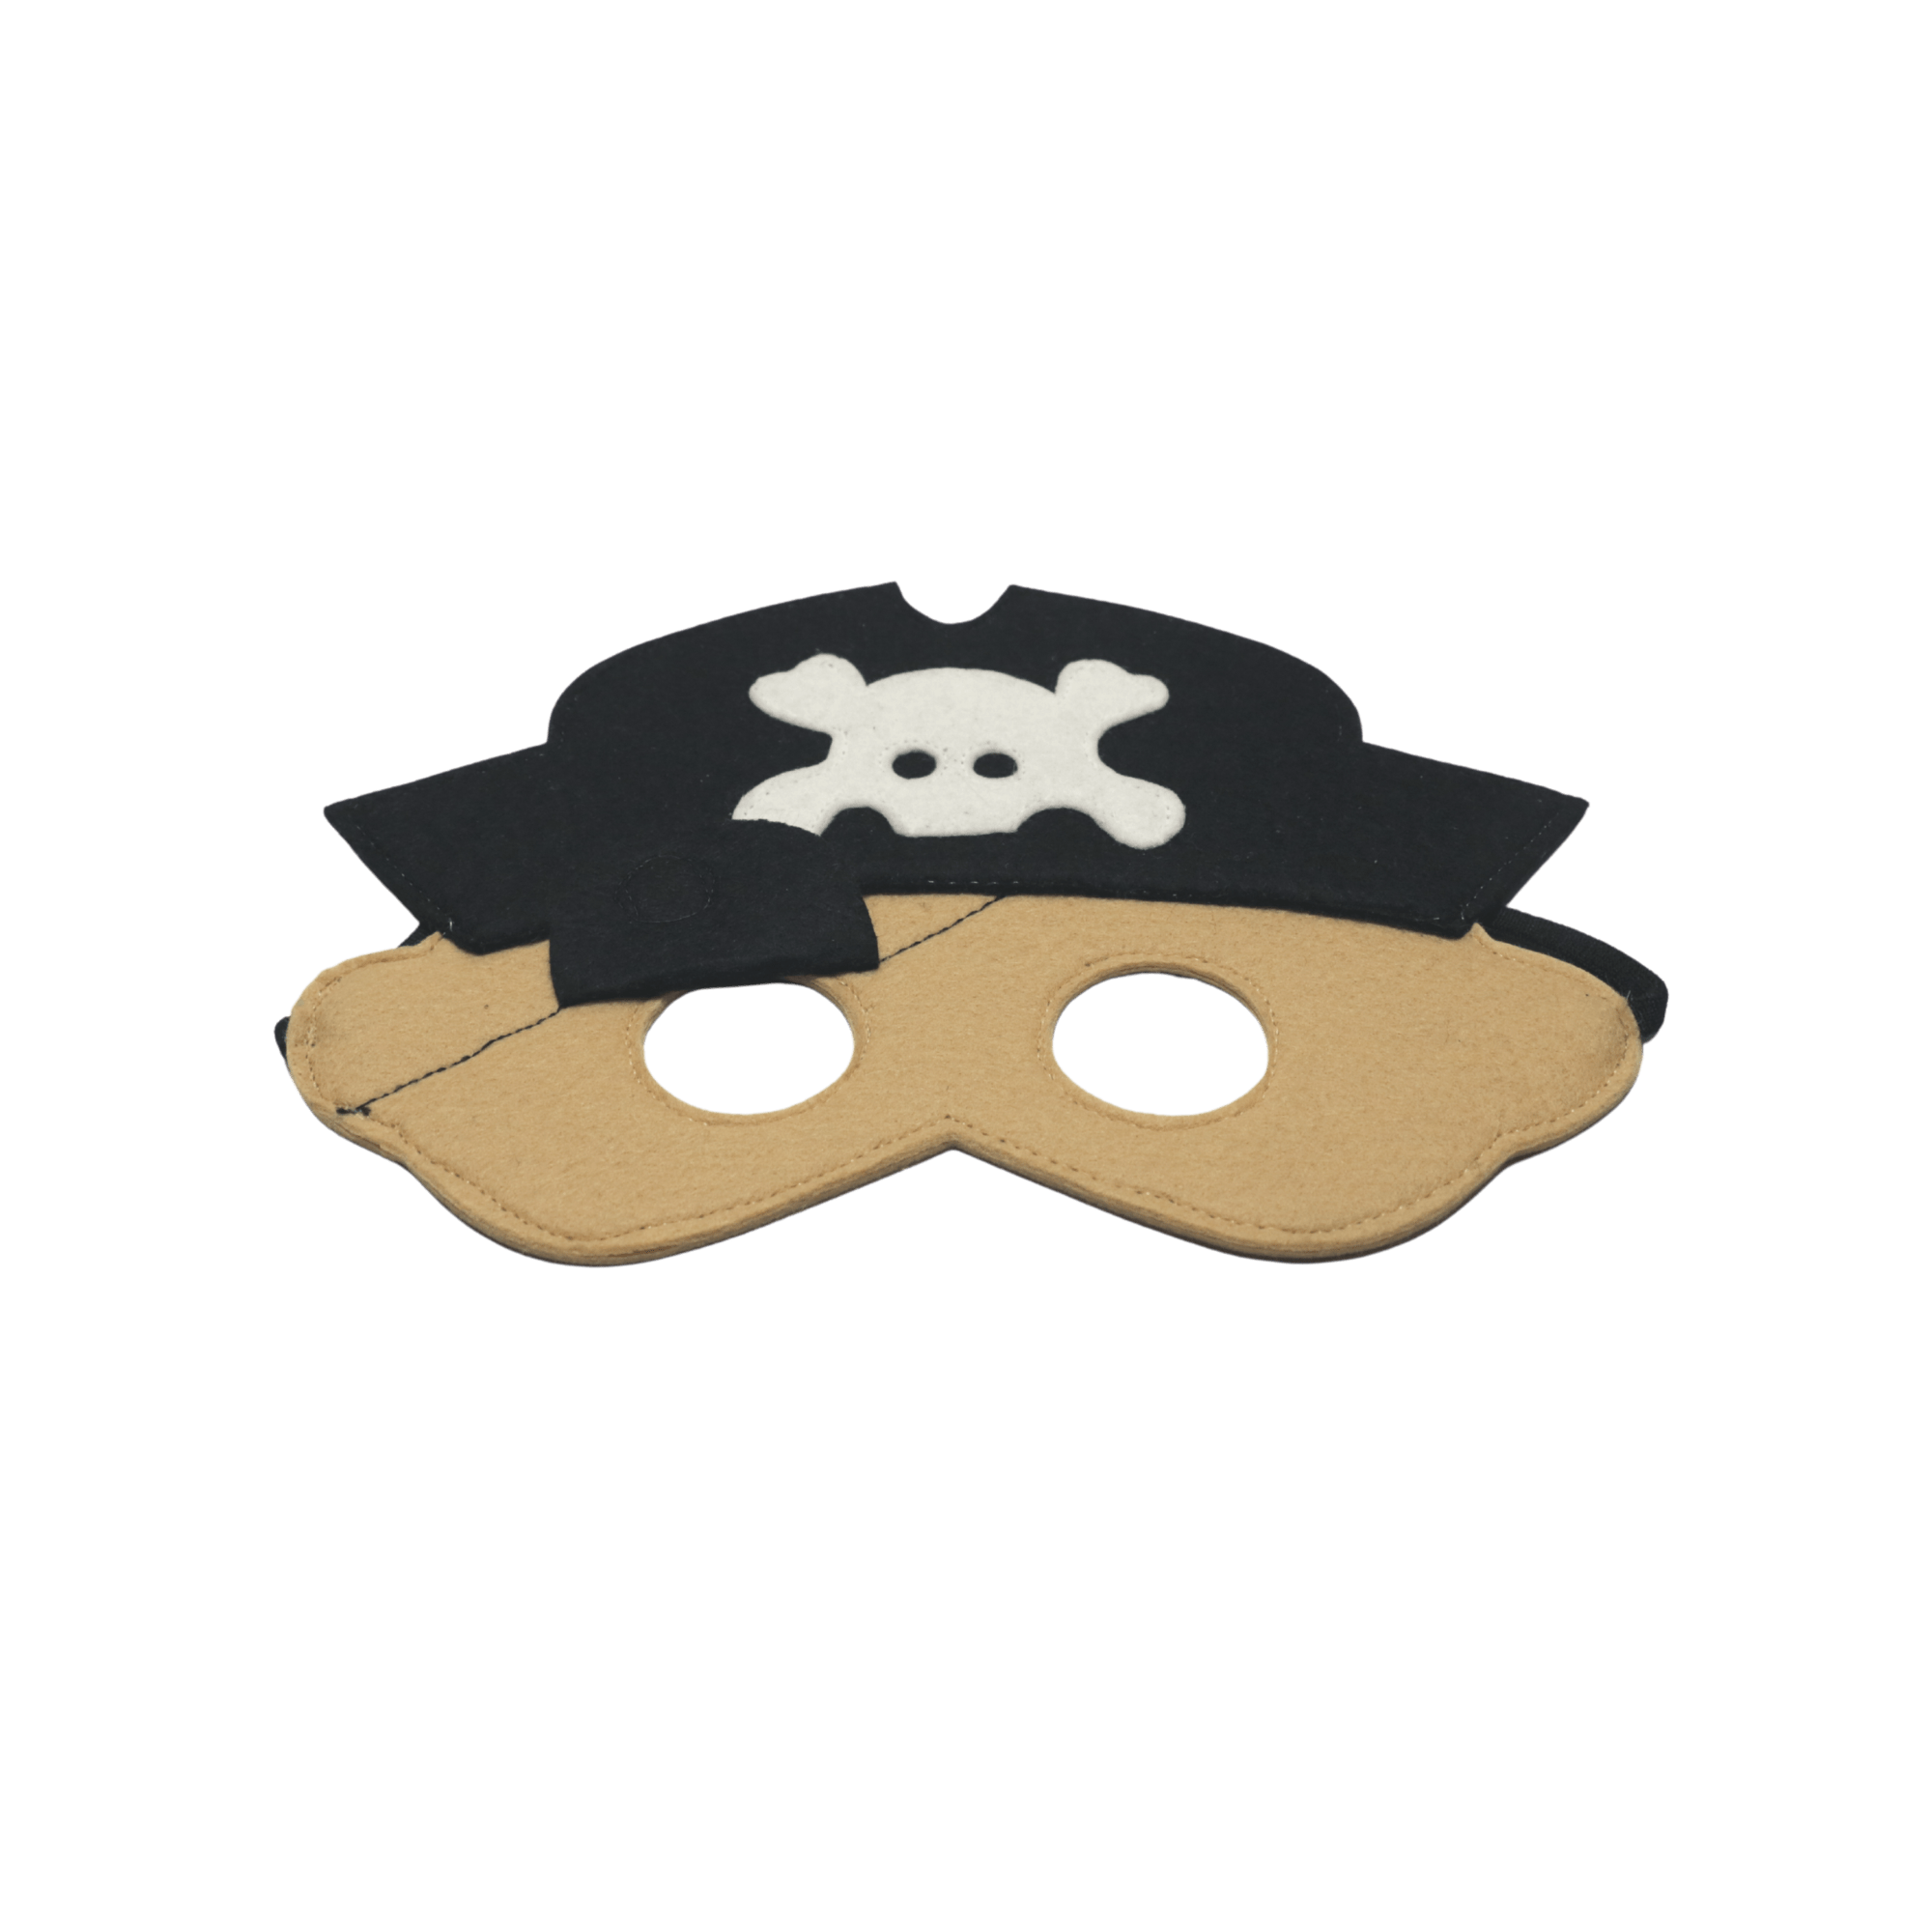 Pirate Felt Mask